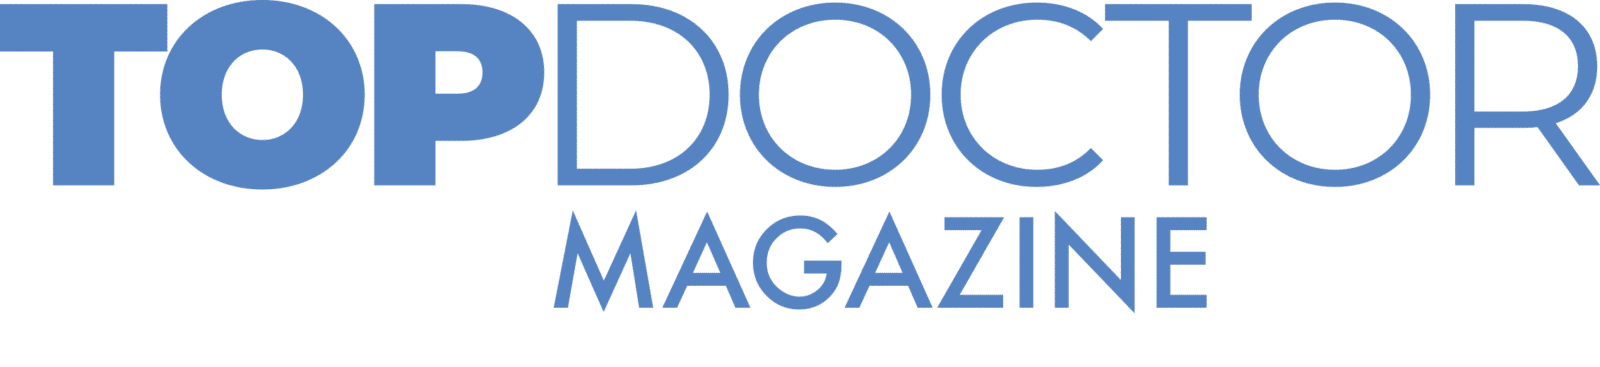 Top-Doctor-Magazine-New-Logo